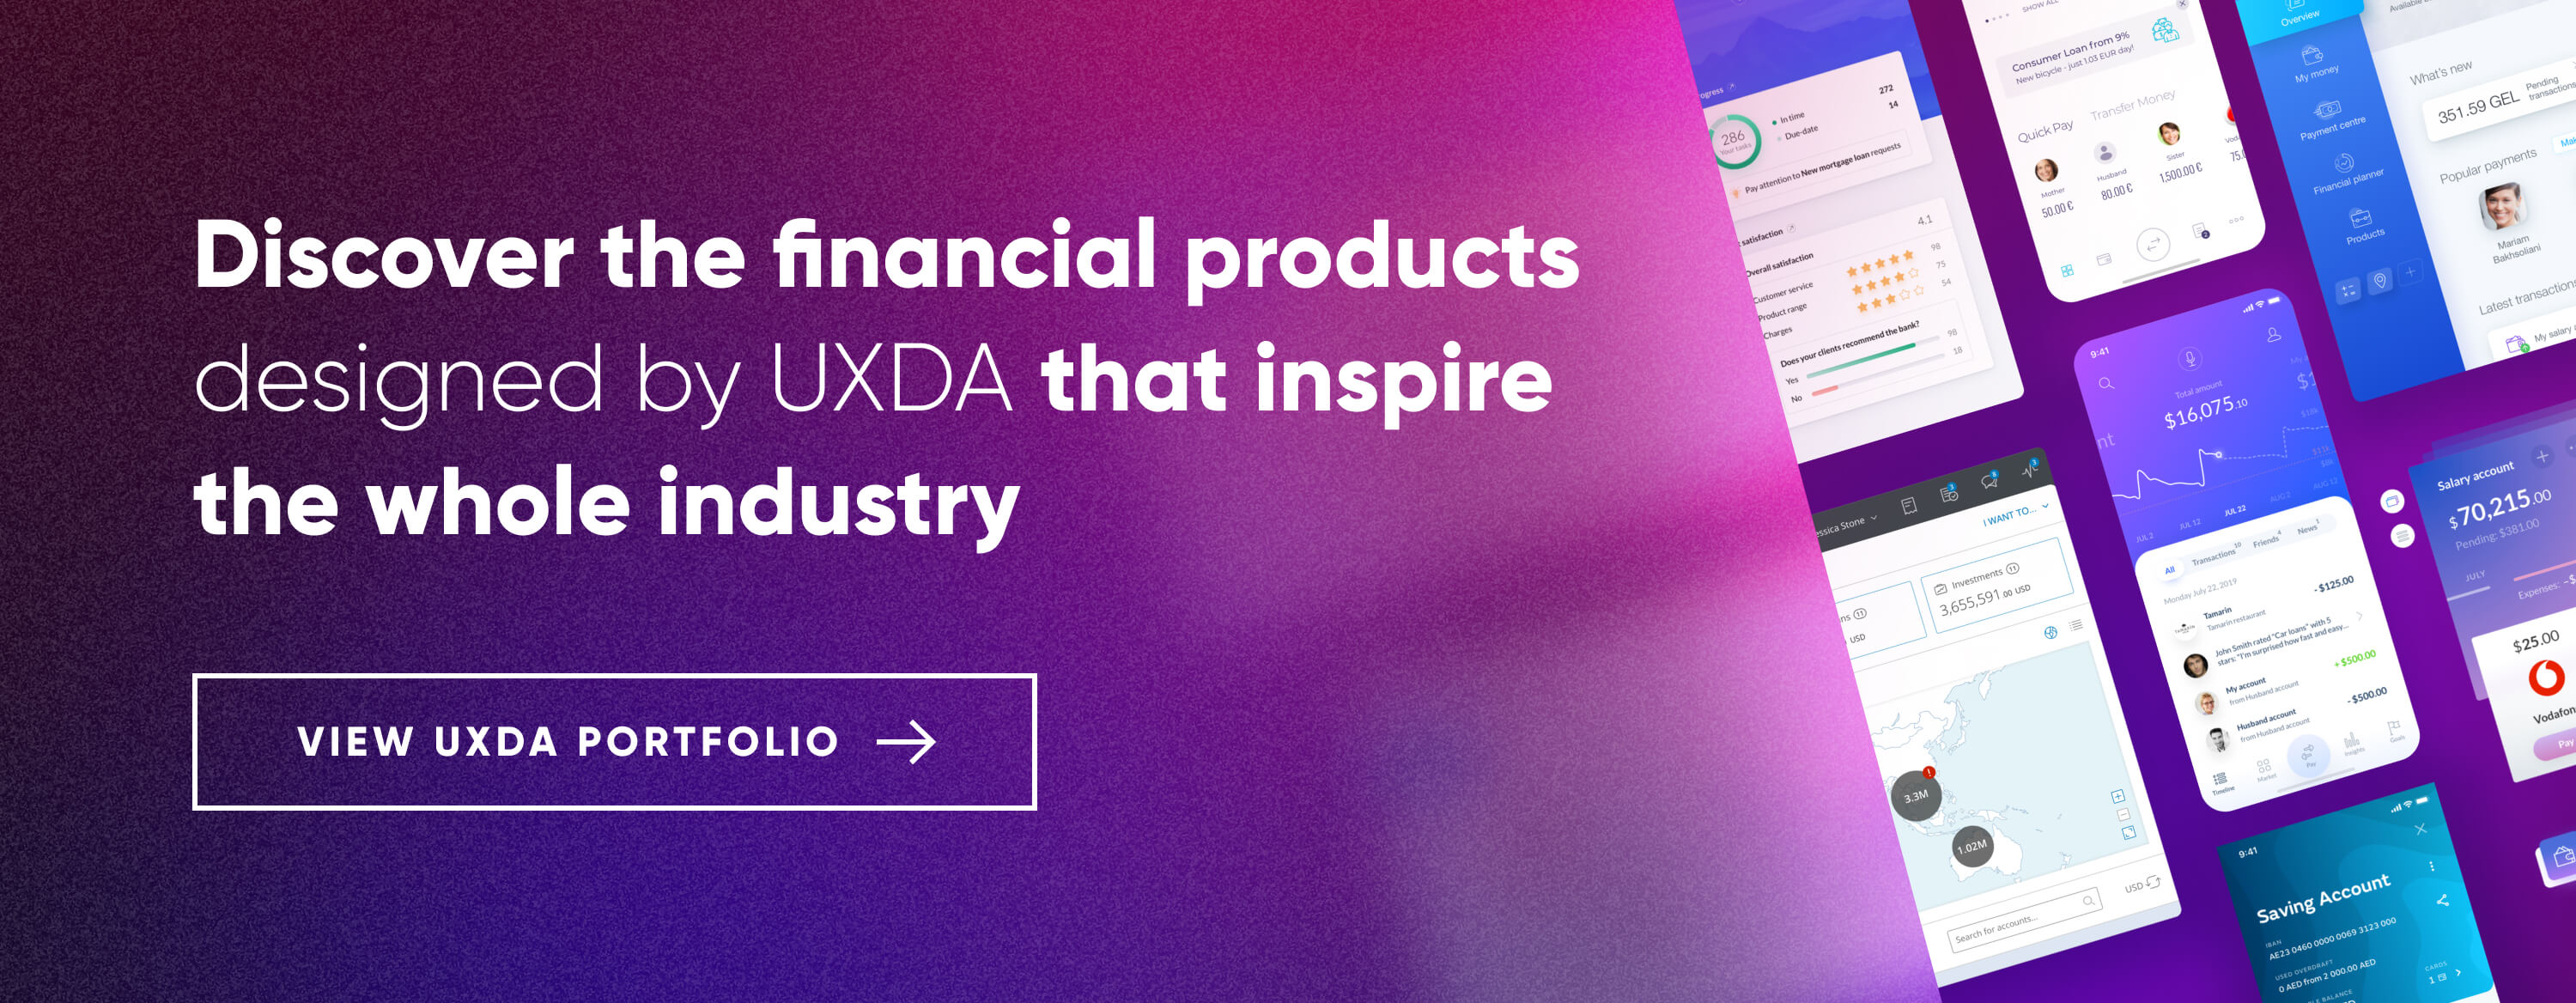 uxda-portfolio-financial-digital-product-inspire-industry-ux-1669633484.jpg